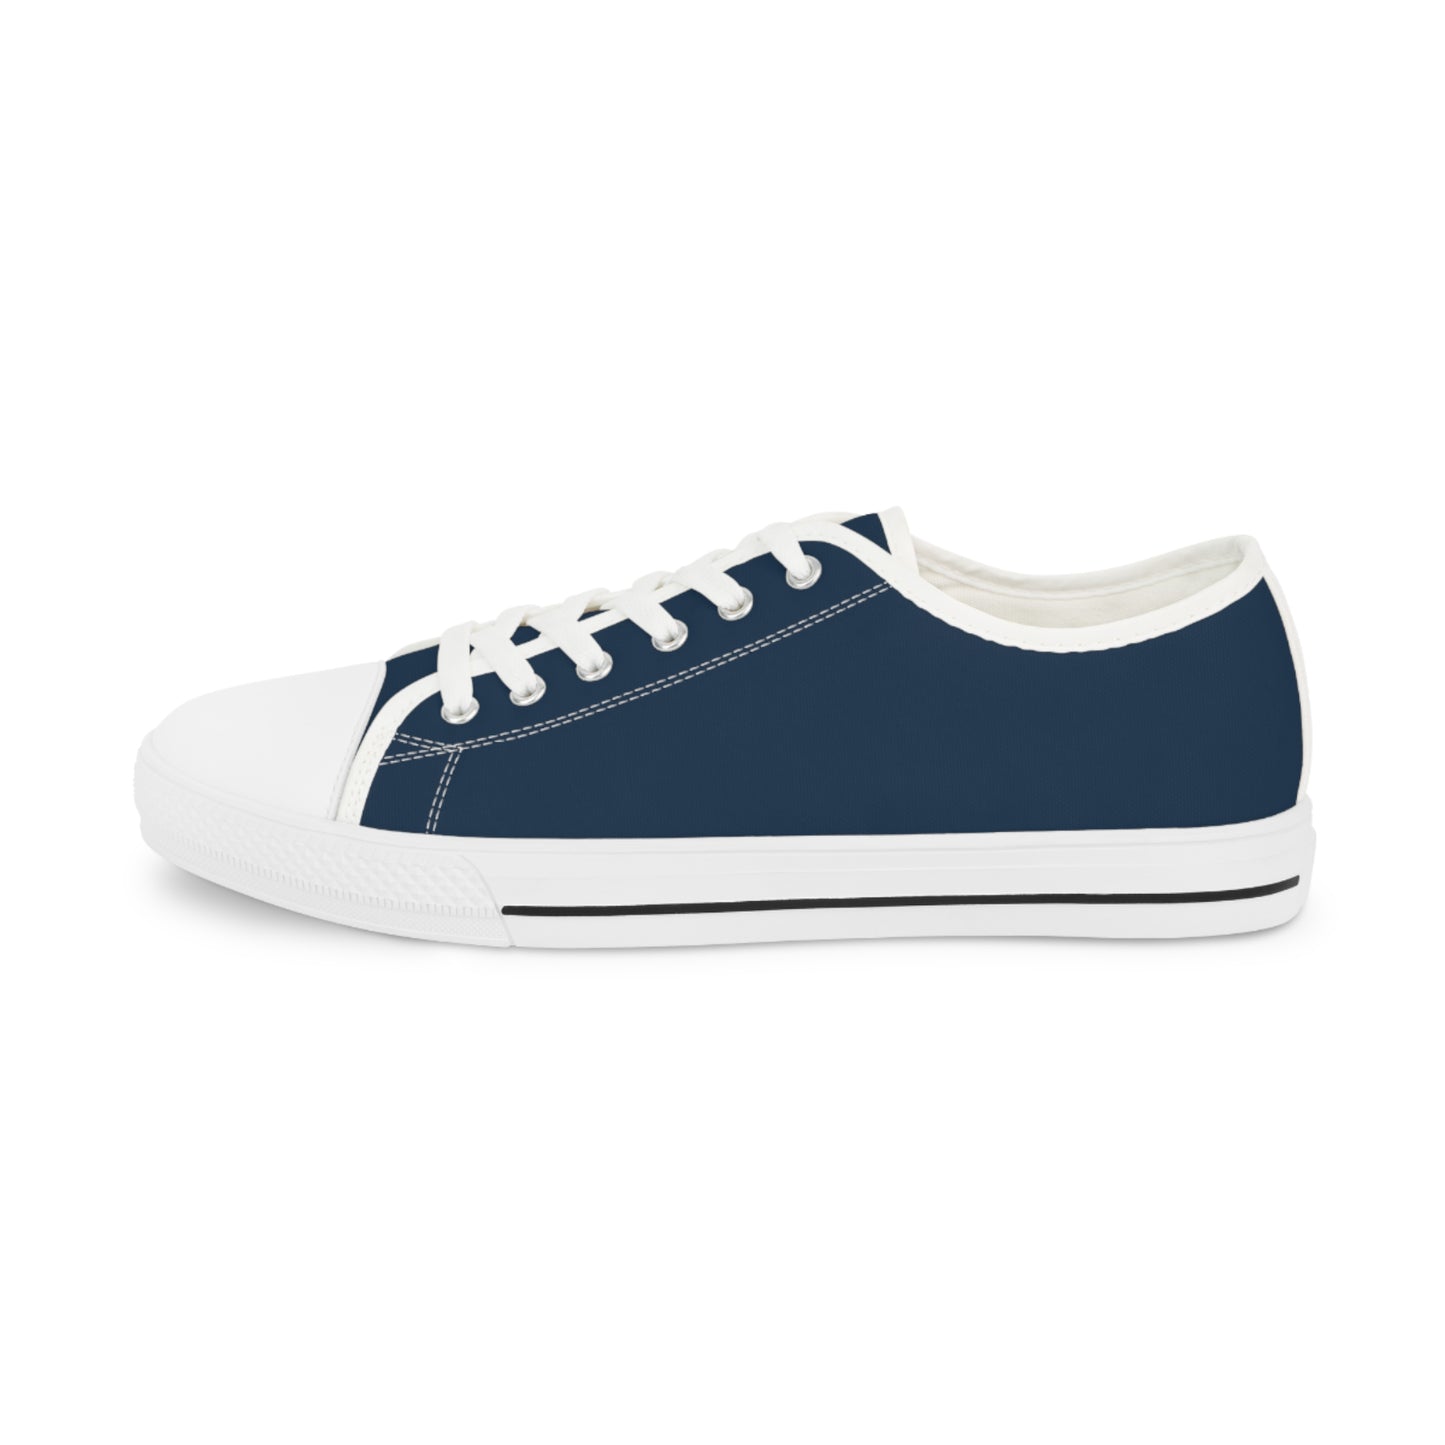 Men's Canvas Low Top Solid Color Sneakers - Ink Blue US 14 Black sole